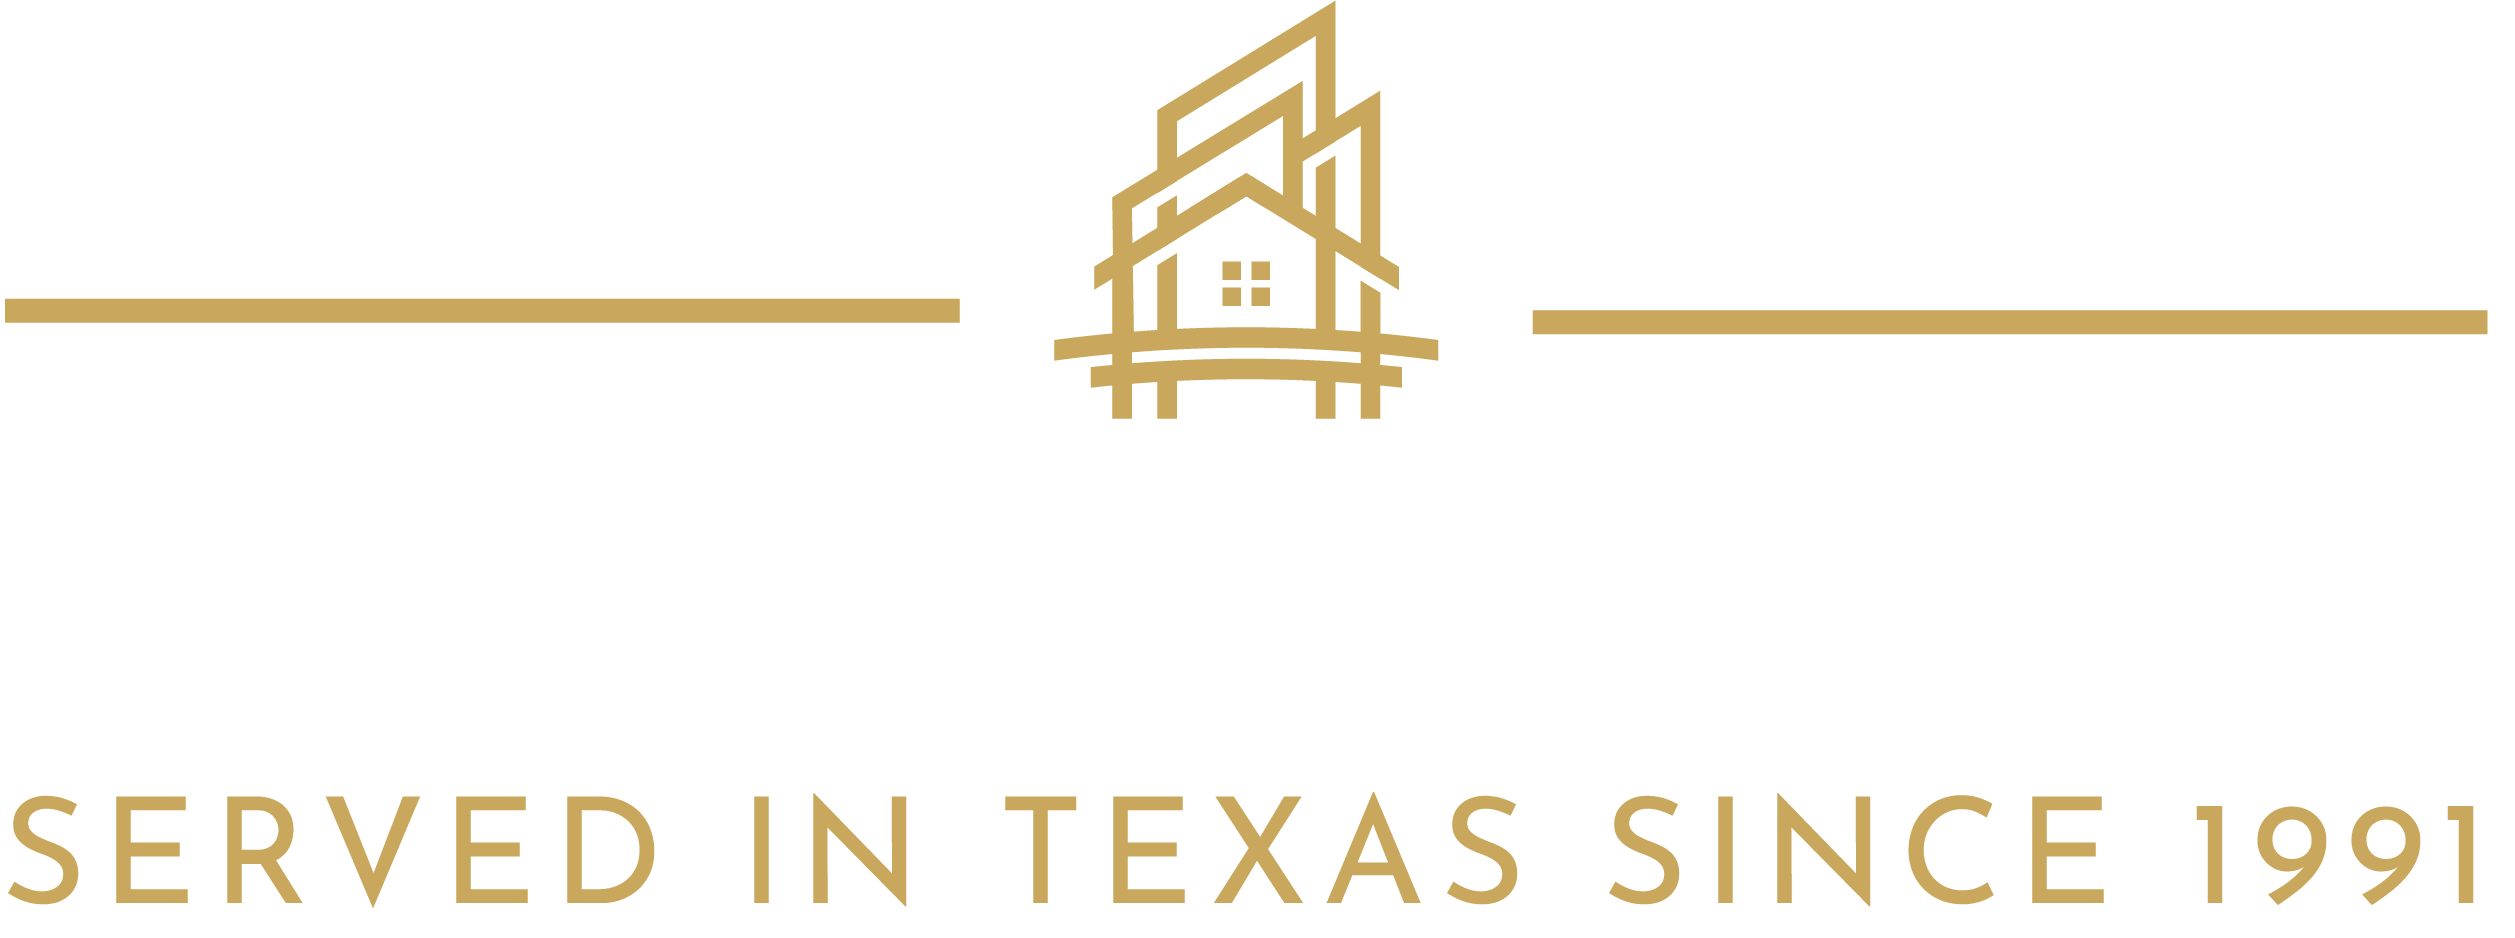 J Realty LLC's logo